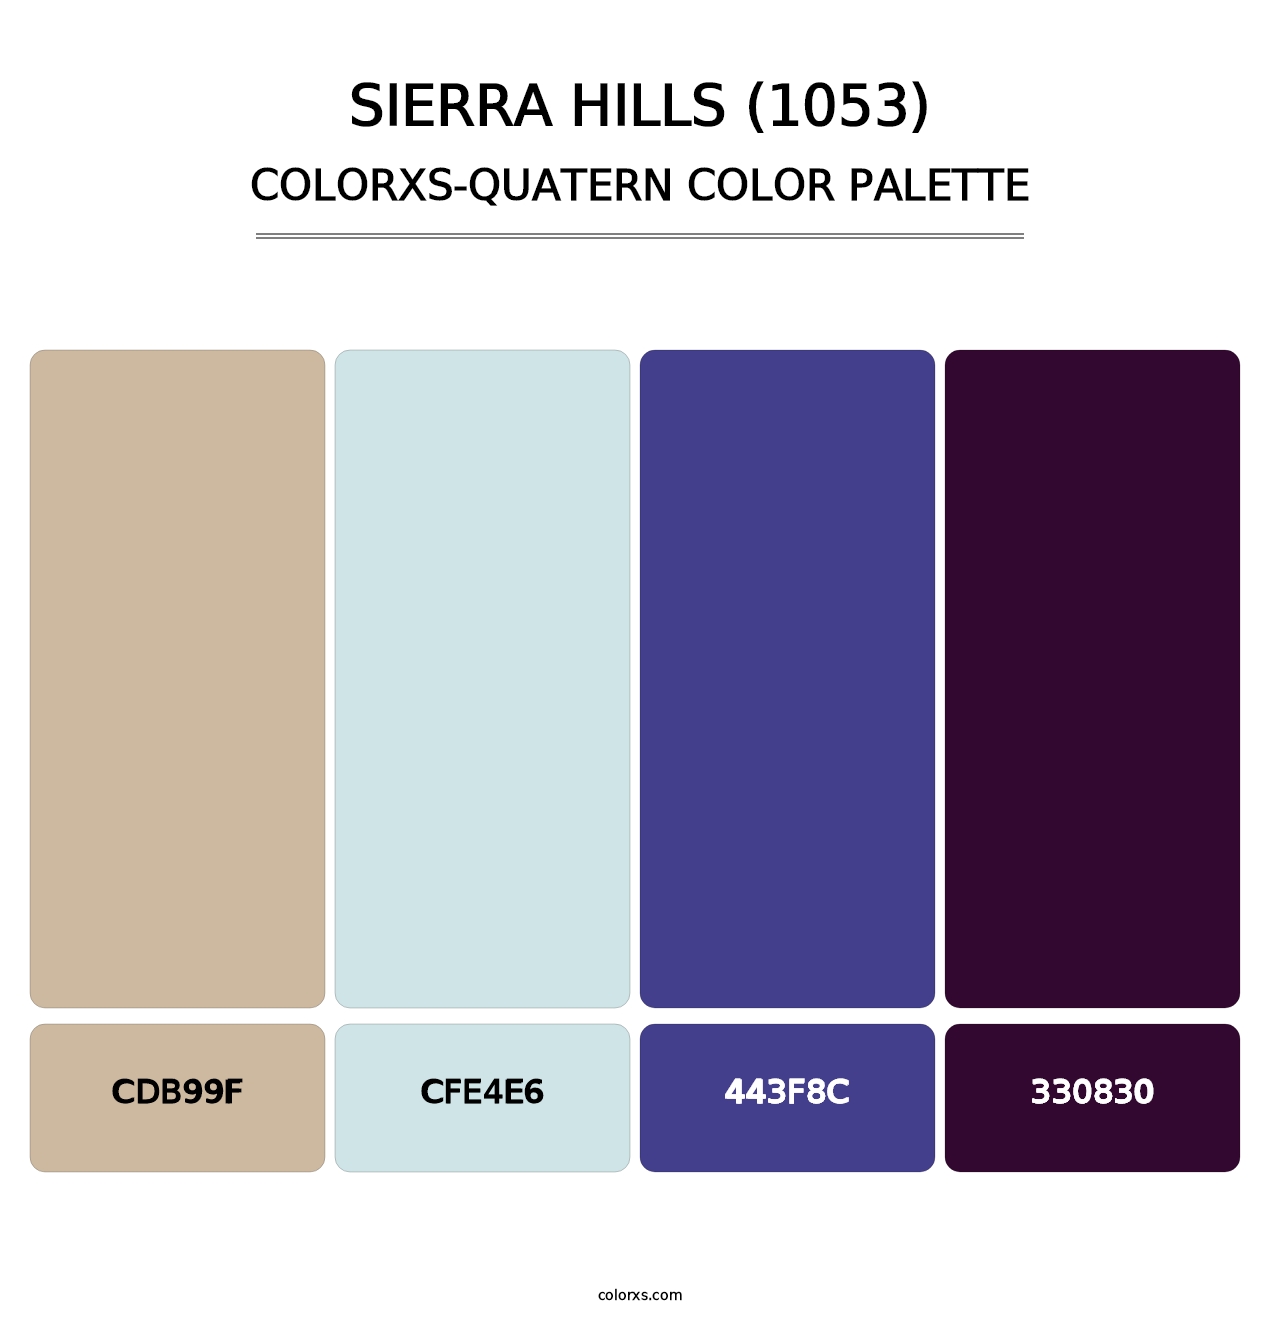 Sierra Hills (1053) - Colorxs Quatern Palette